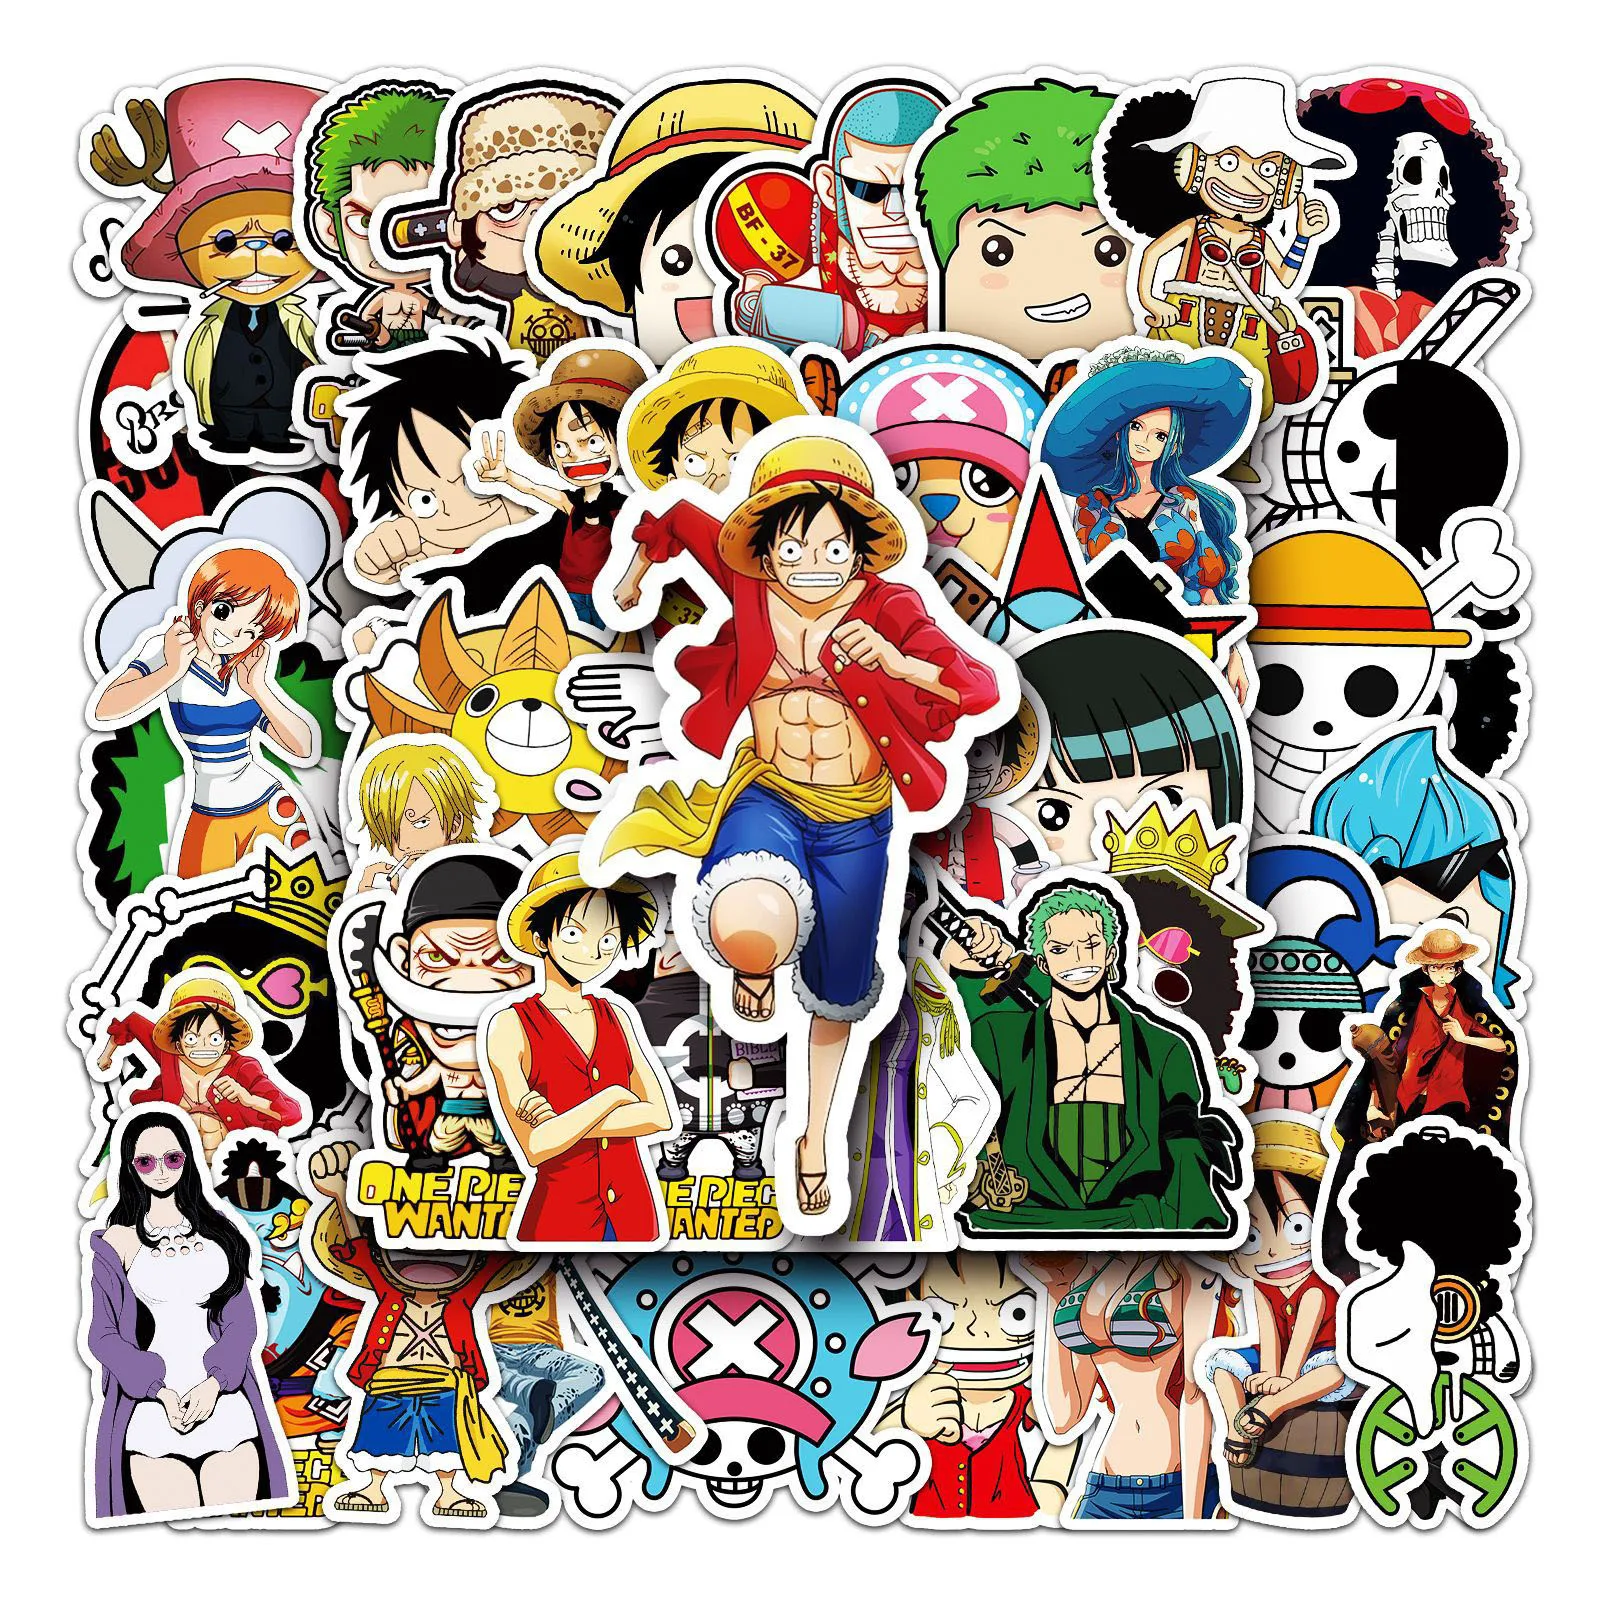 50 Pieces/Set Of One Piece Graffiti Stickers Suitcase Scooter Car Guitar Waterproof Cartoon Decorative Stickers